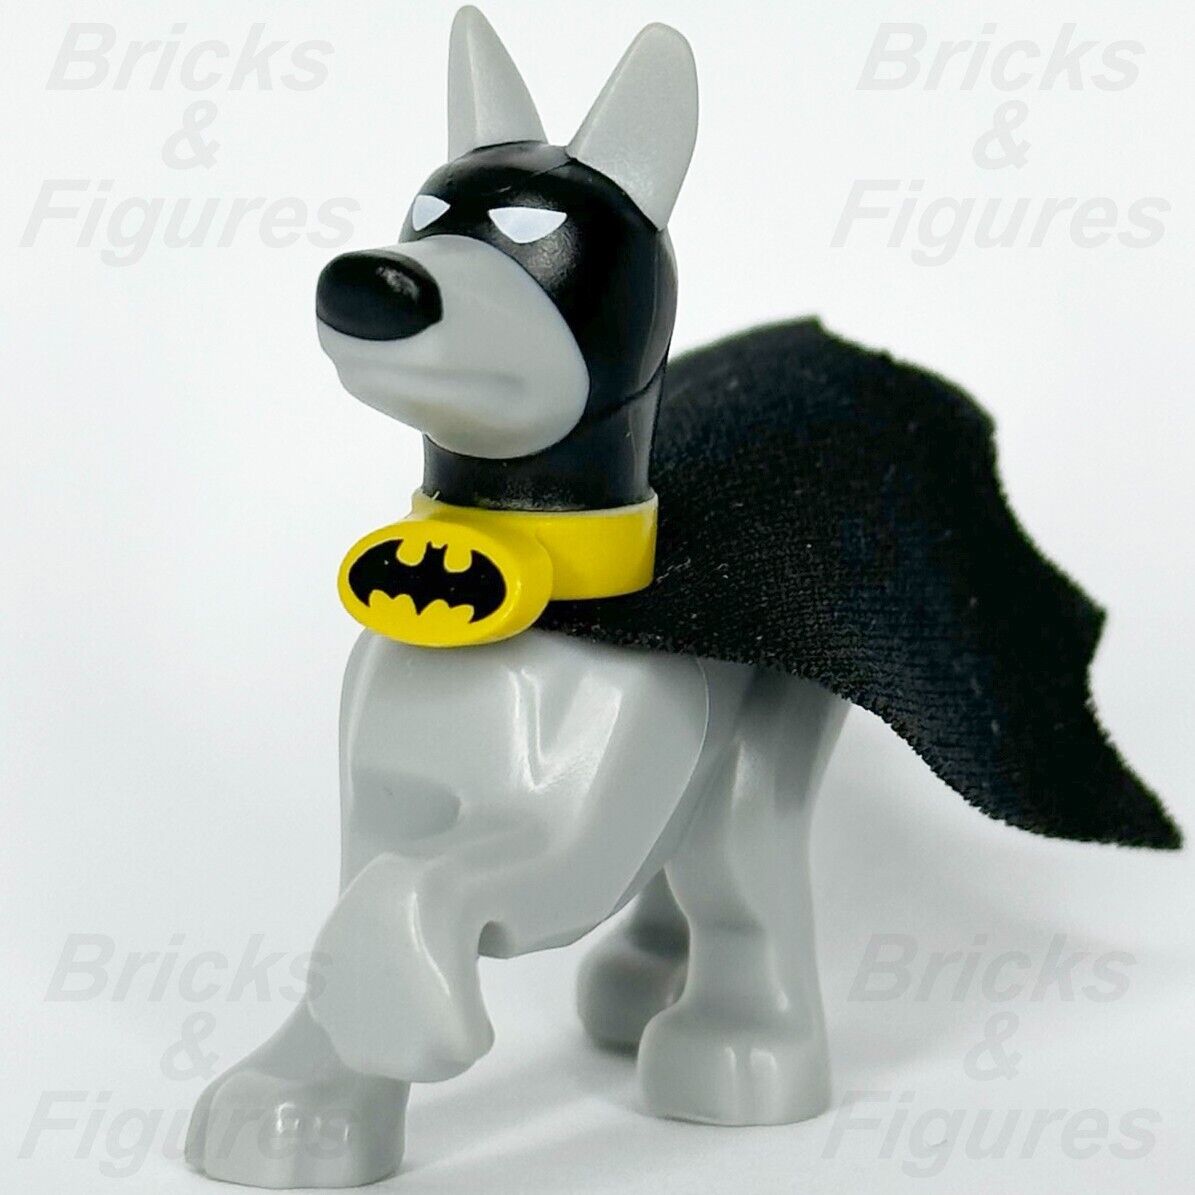 LEGO DC Super Heroes Ace the Bat-Hound Minifigure Dog Batman 2 76110 30533c02 5